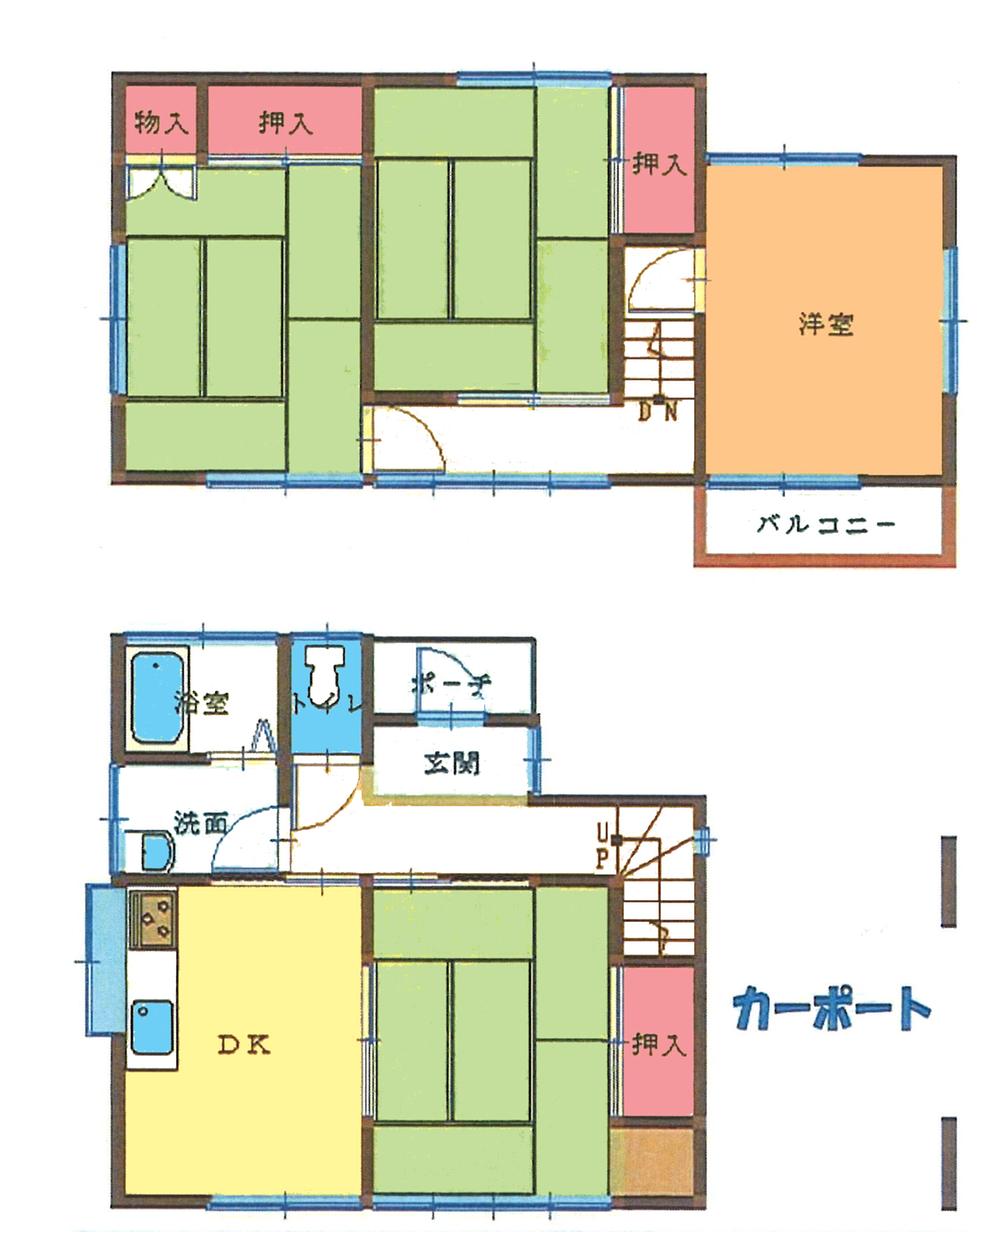 Floor plan. 14.8 million yen, 4DK, Land area 100.02 sq m , Building area 74.52 sq m floor plan